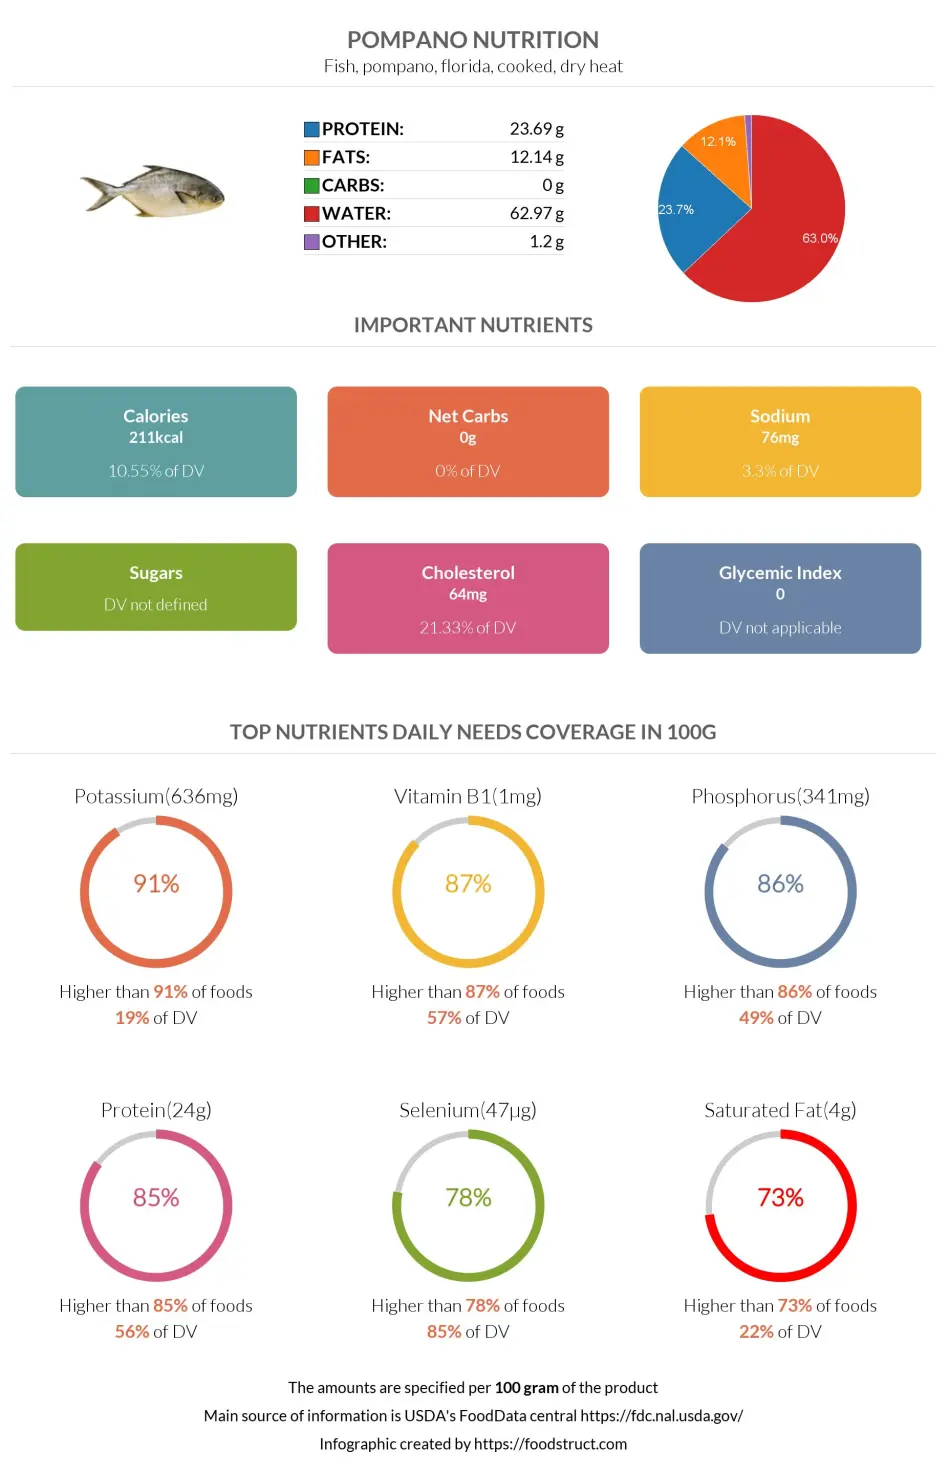 Pompano nutrition infographic